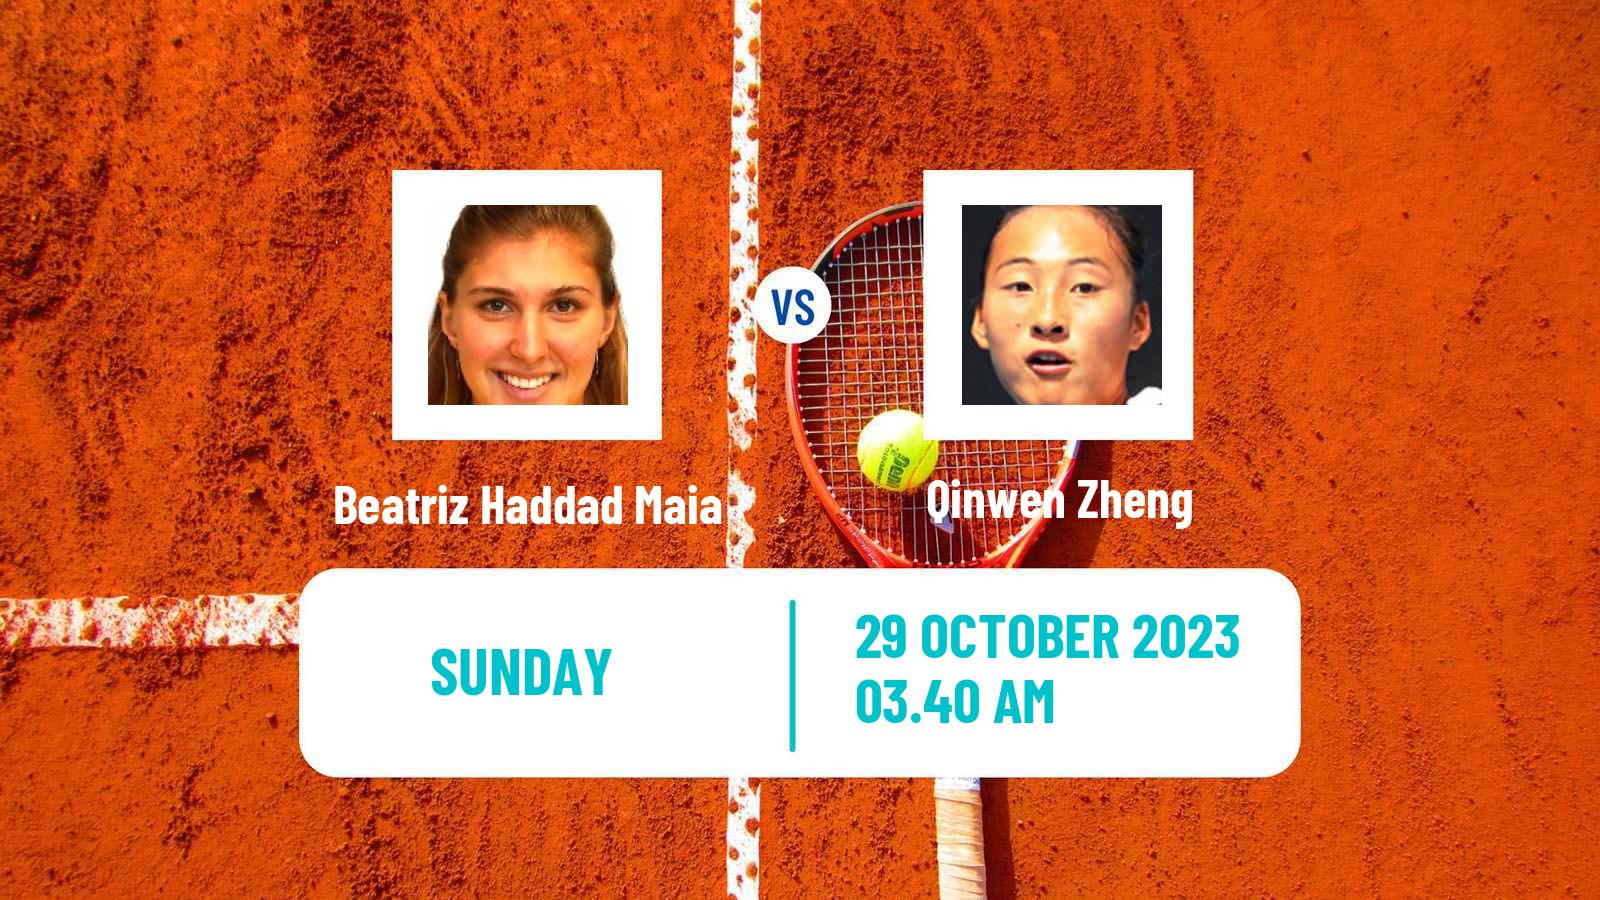 Tennis WTA Zhuhai Beatriz Haddad Maia - Qinwen Zheng